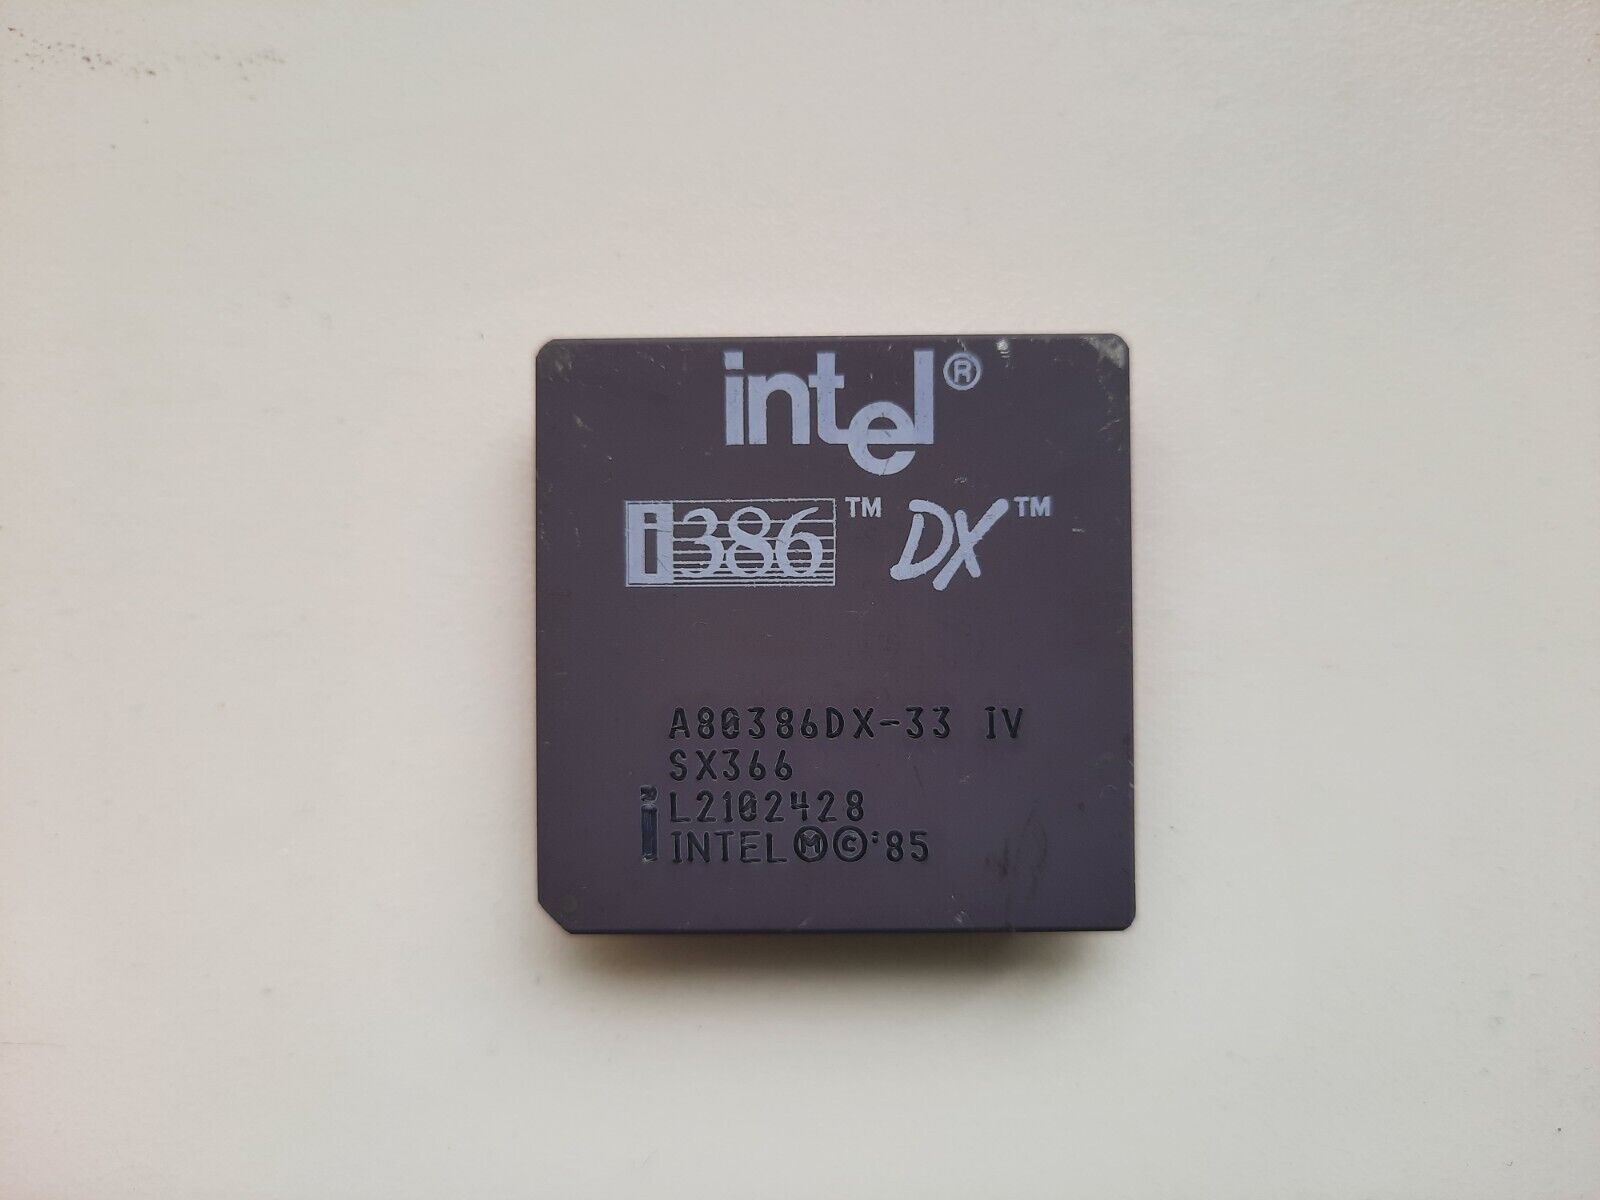 386DX Intel A80386DX-33 IV SX366 mfg KOREA MALAY Vintage CPU GOLD